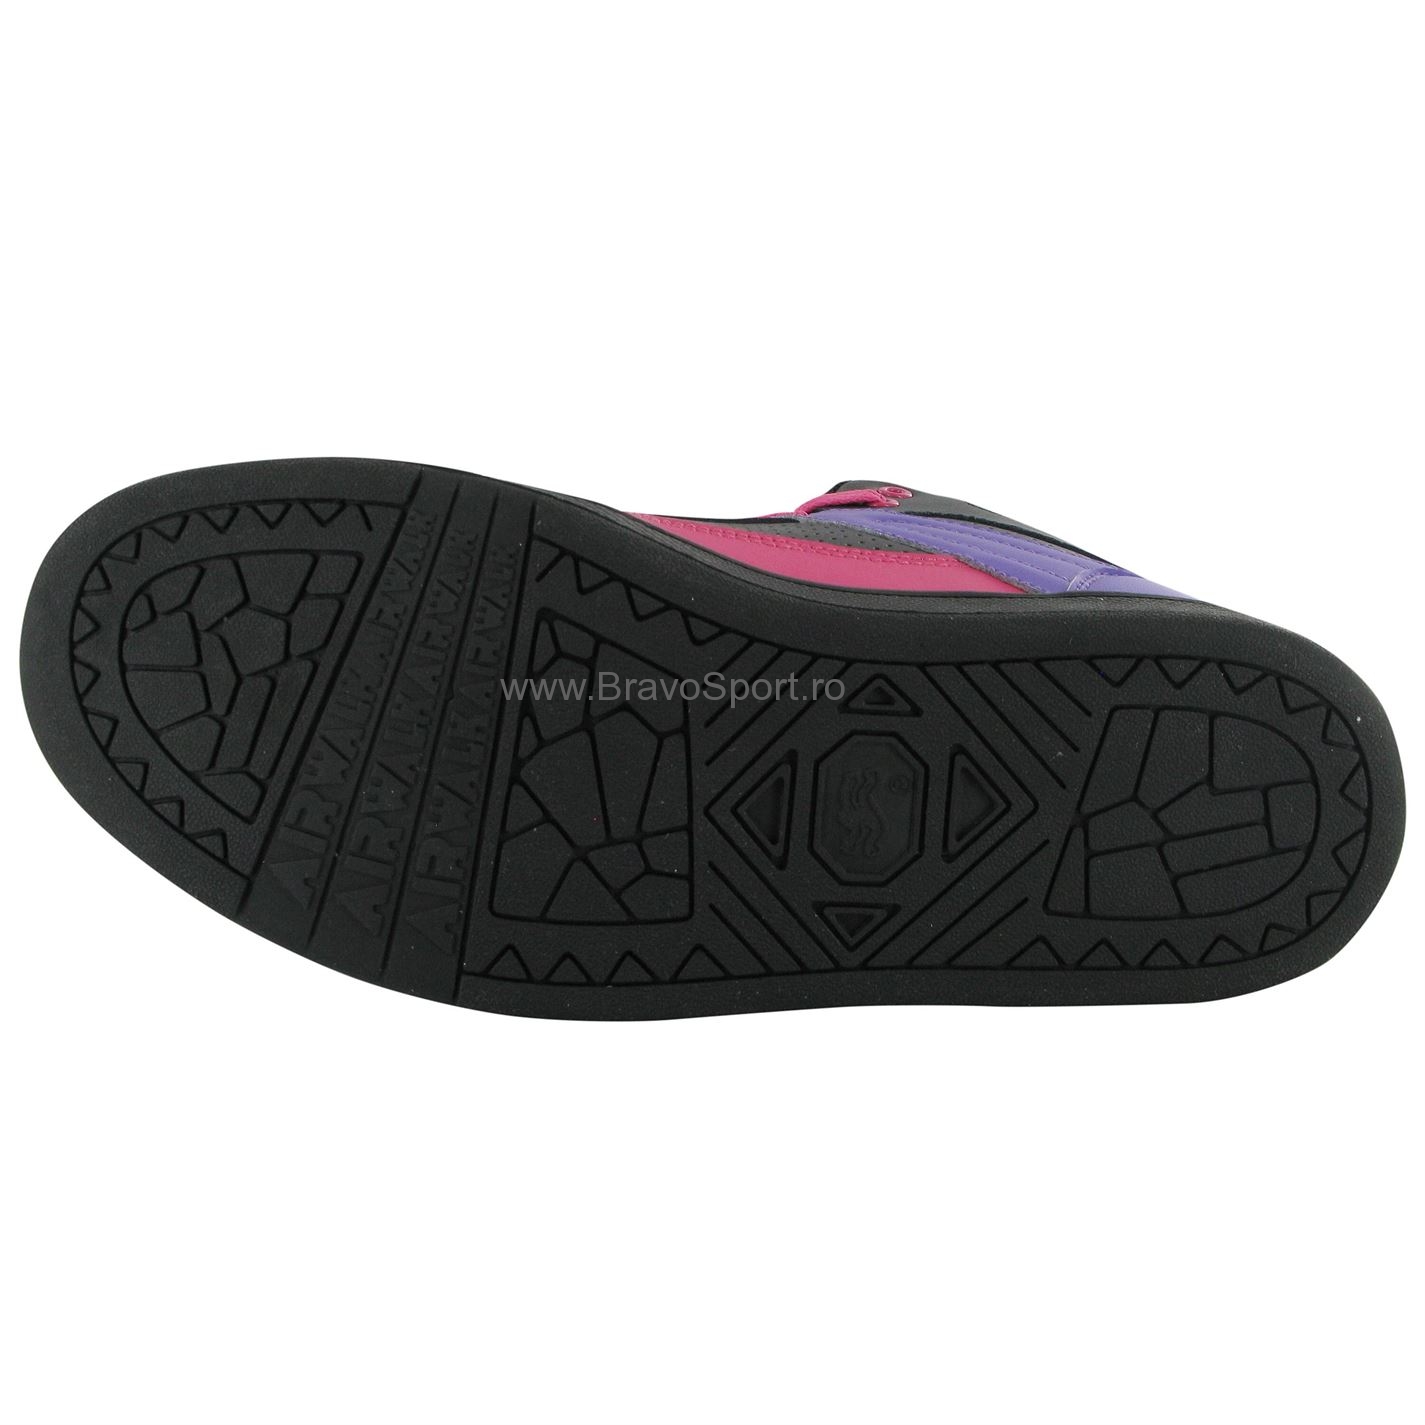 Airwalk Mila Mid Skate Shoes pentru Femei negru mov roz